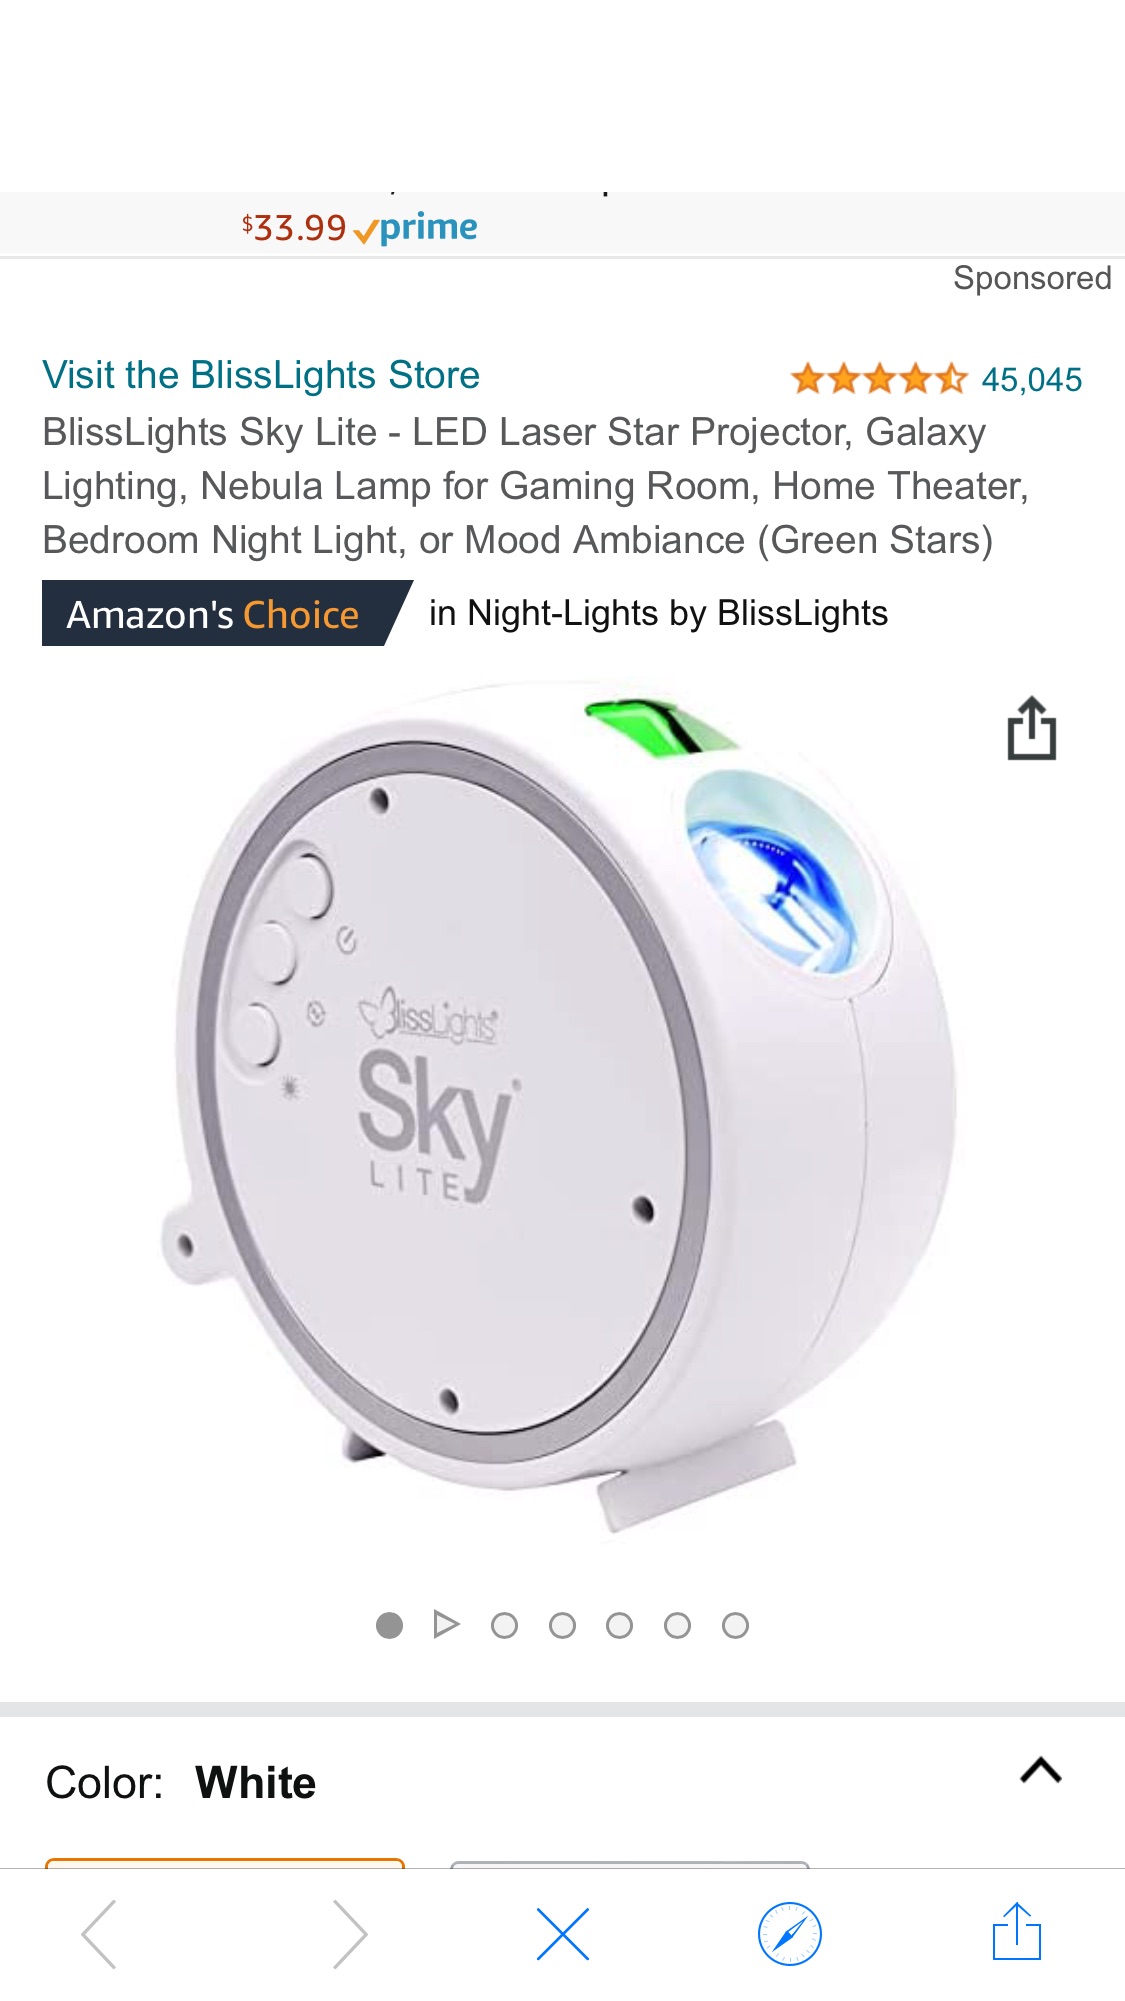 Amazon.com: BlissLights Sky Lite - LED Laser Star Projector, Galaxy Lighting, Nebula Lamp for Gaming Room, Home Theater, Bedroom Night Light, or Mood Ambiance (Green Stars)星光灯